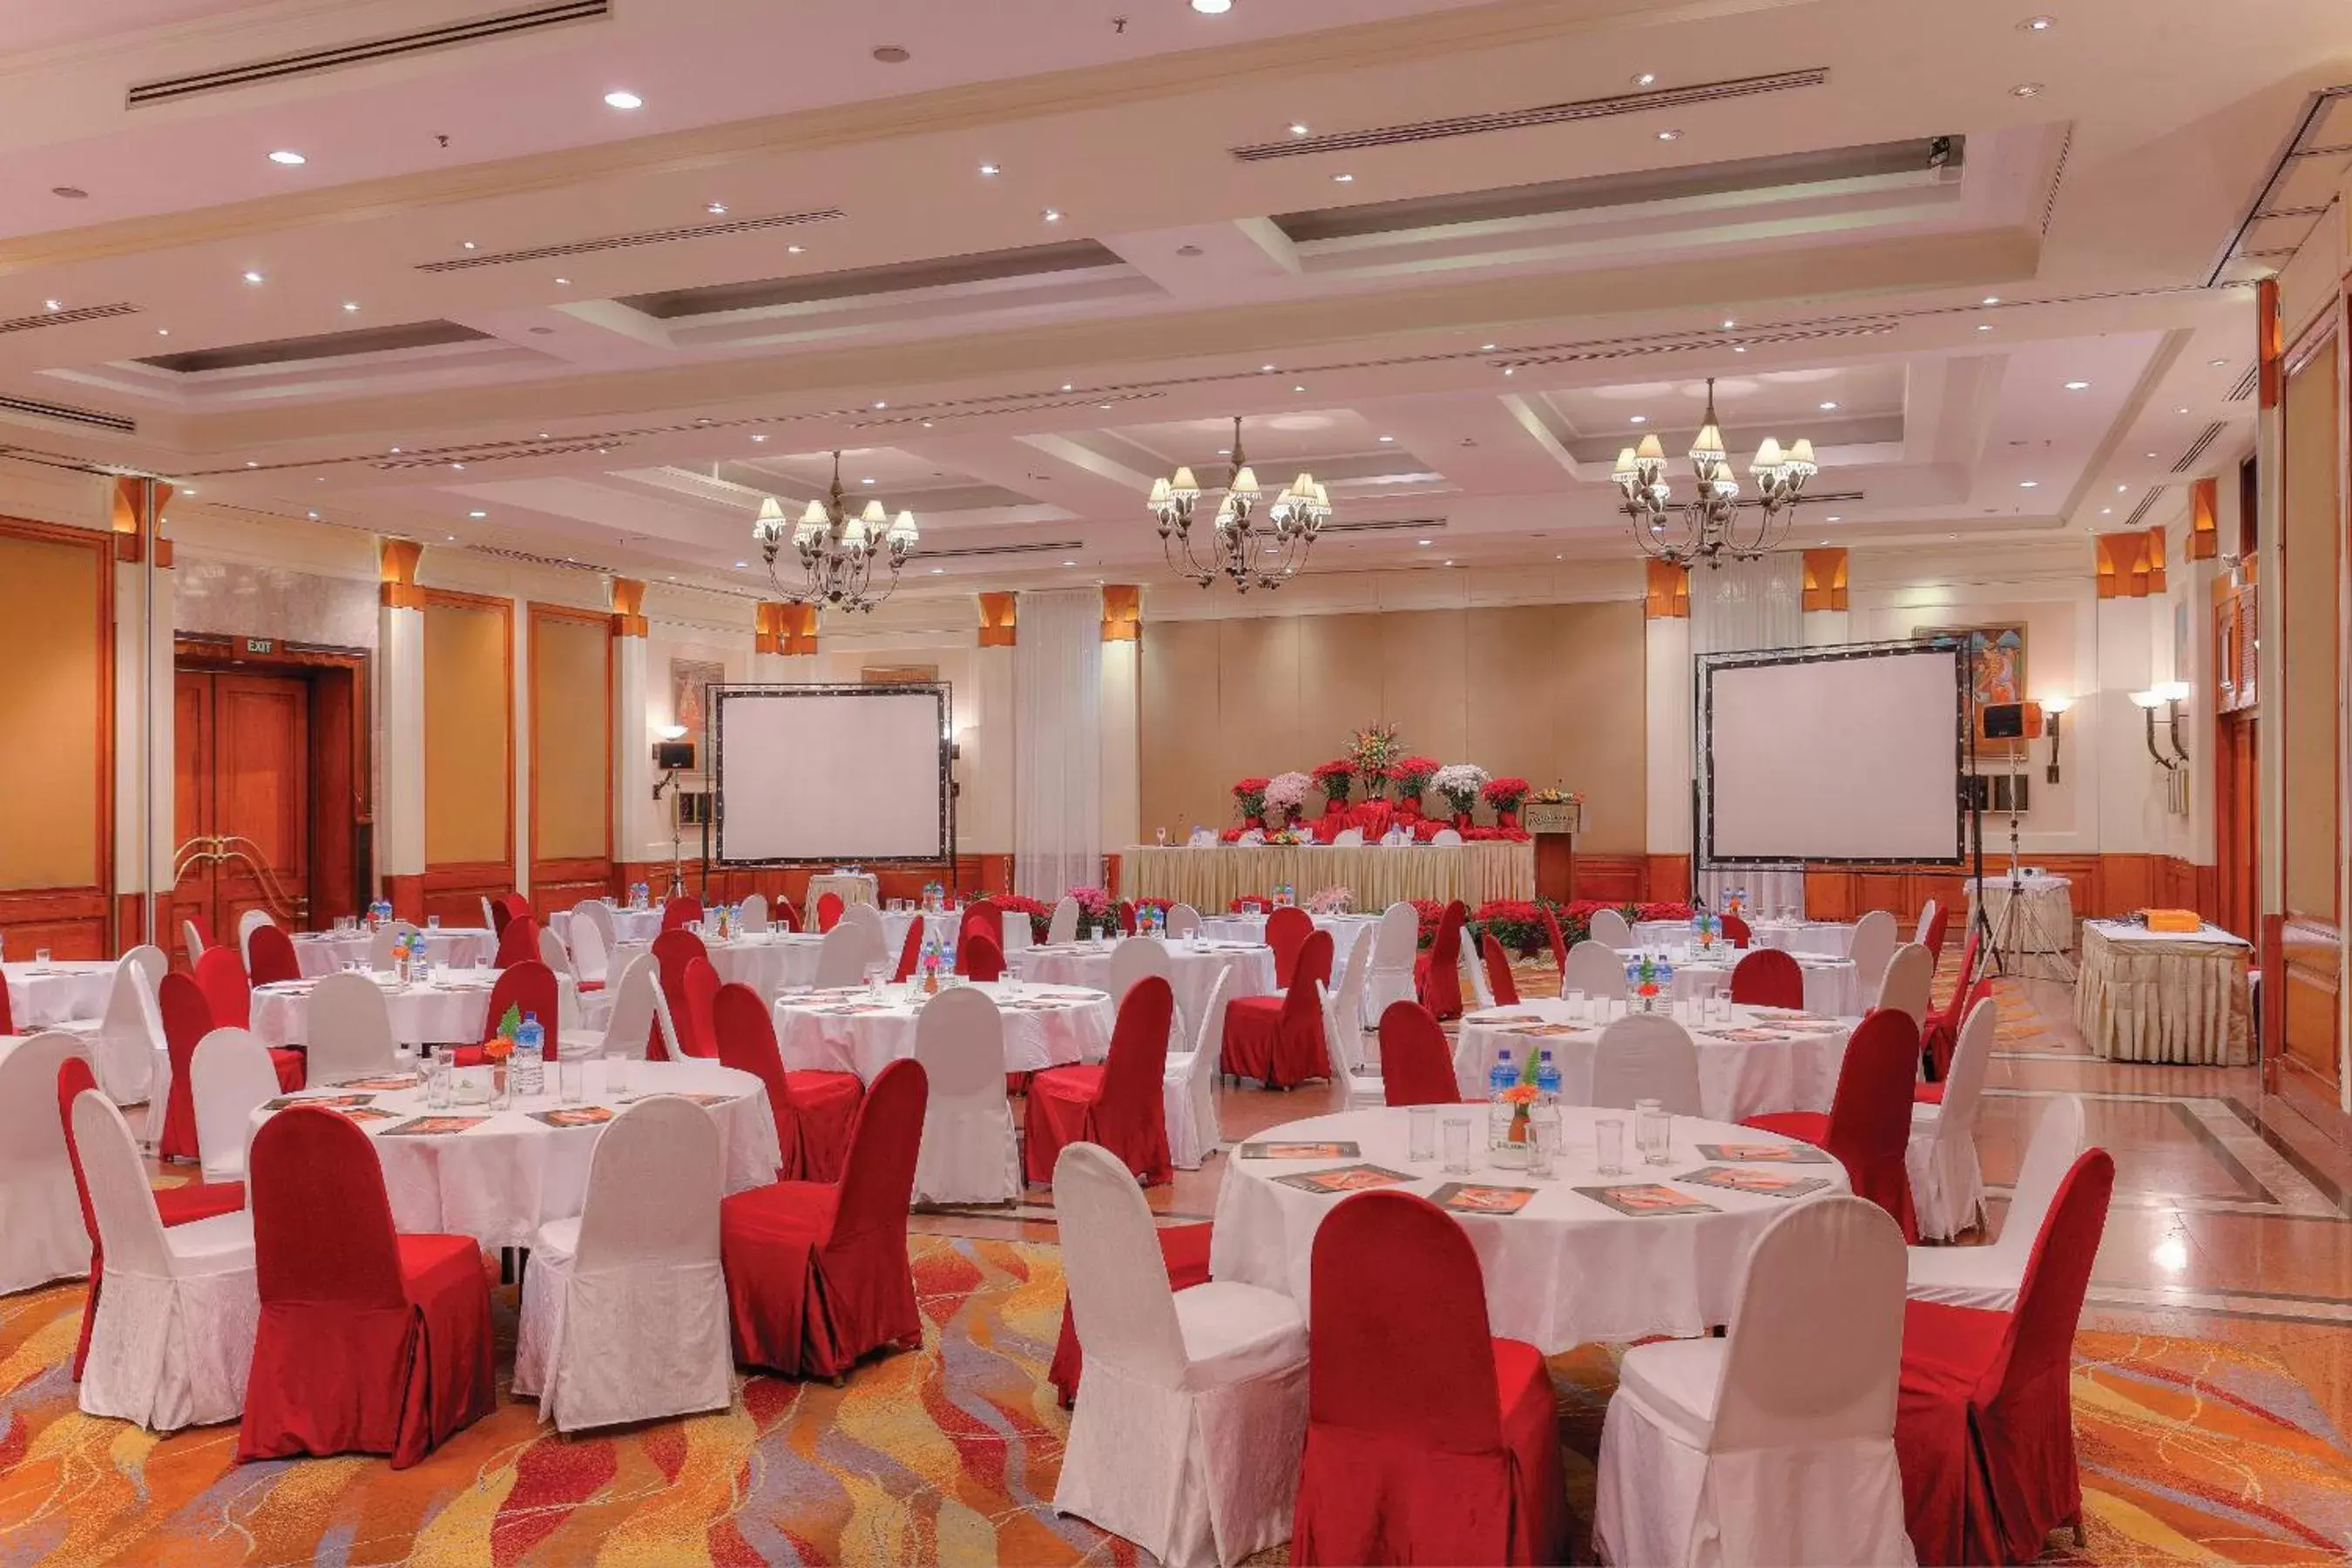 Banquet/Function facilities, Banquet Facilities in Radisson Hotel Kathmandu